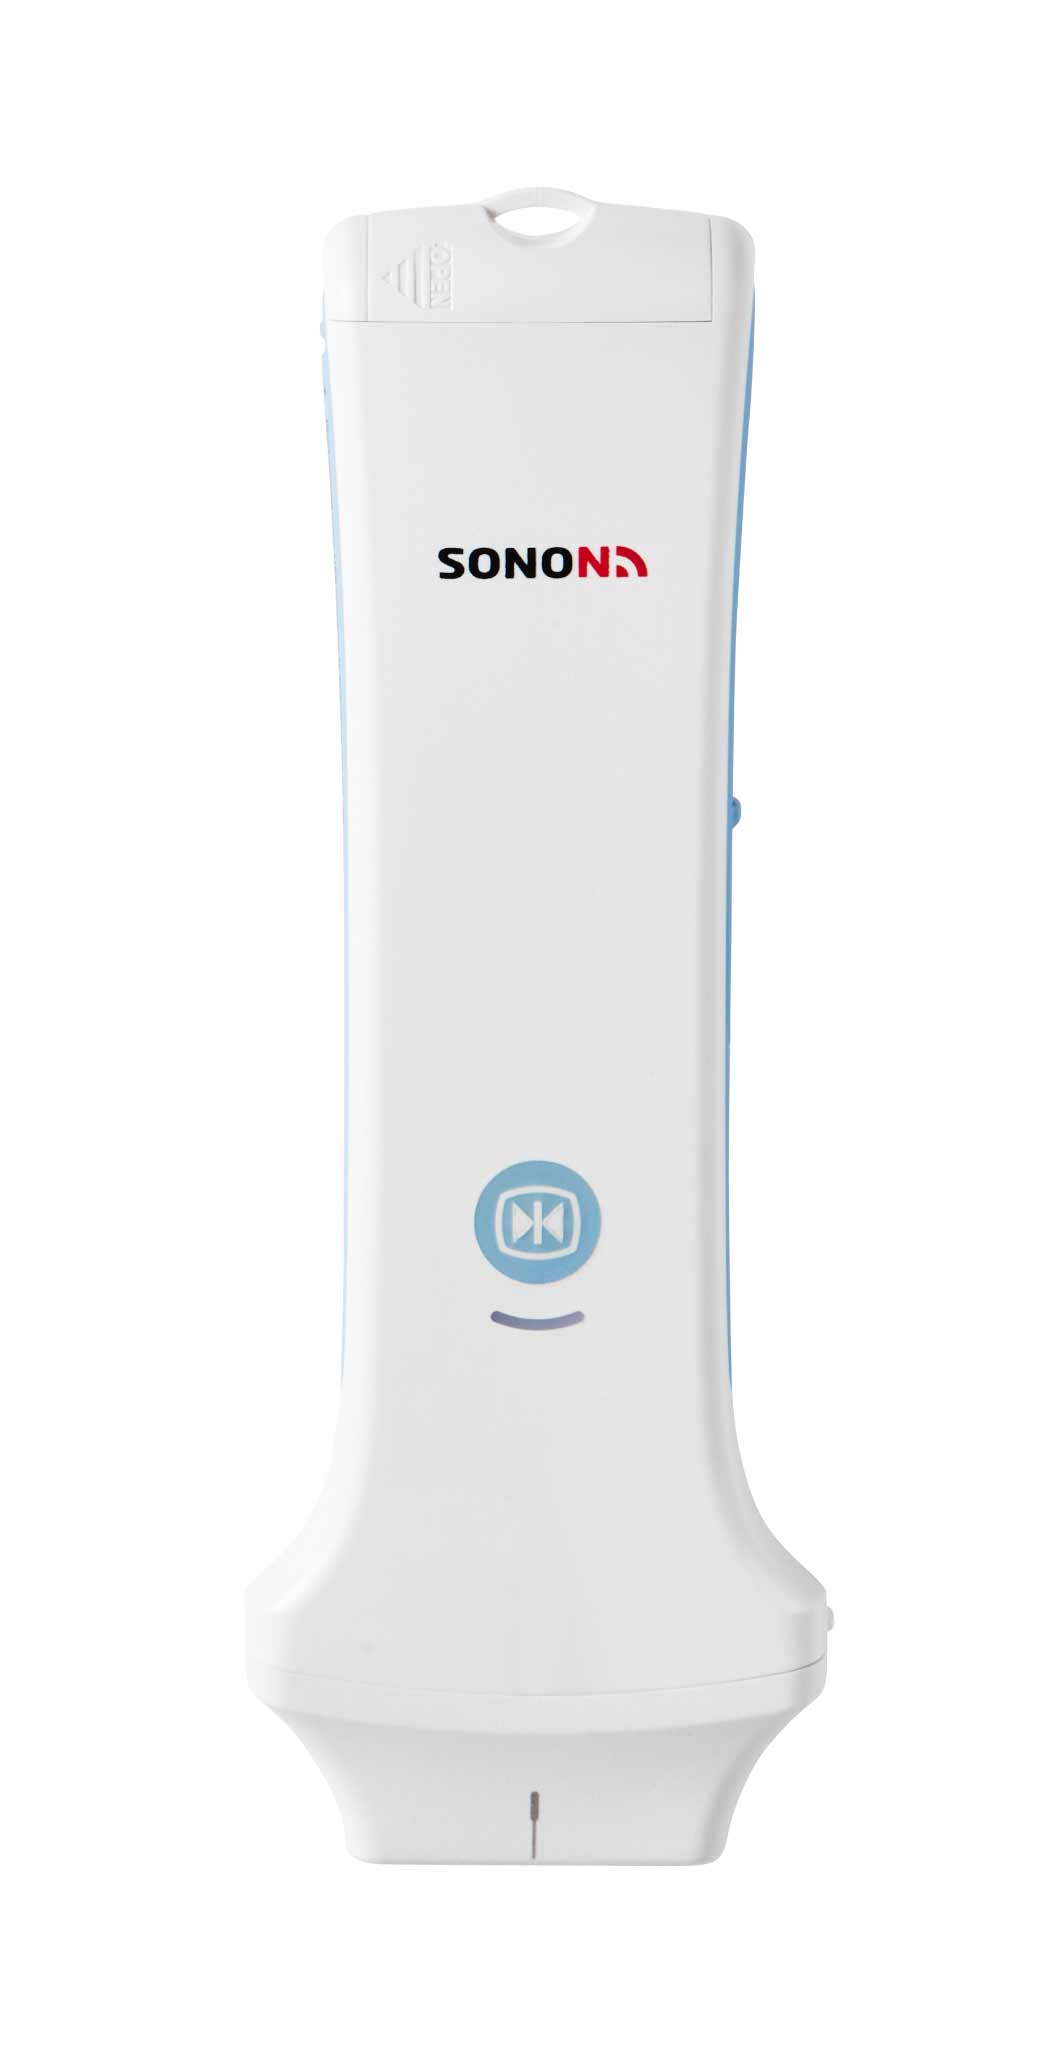 Sonon-300L-Wireless-ultrasound-device